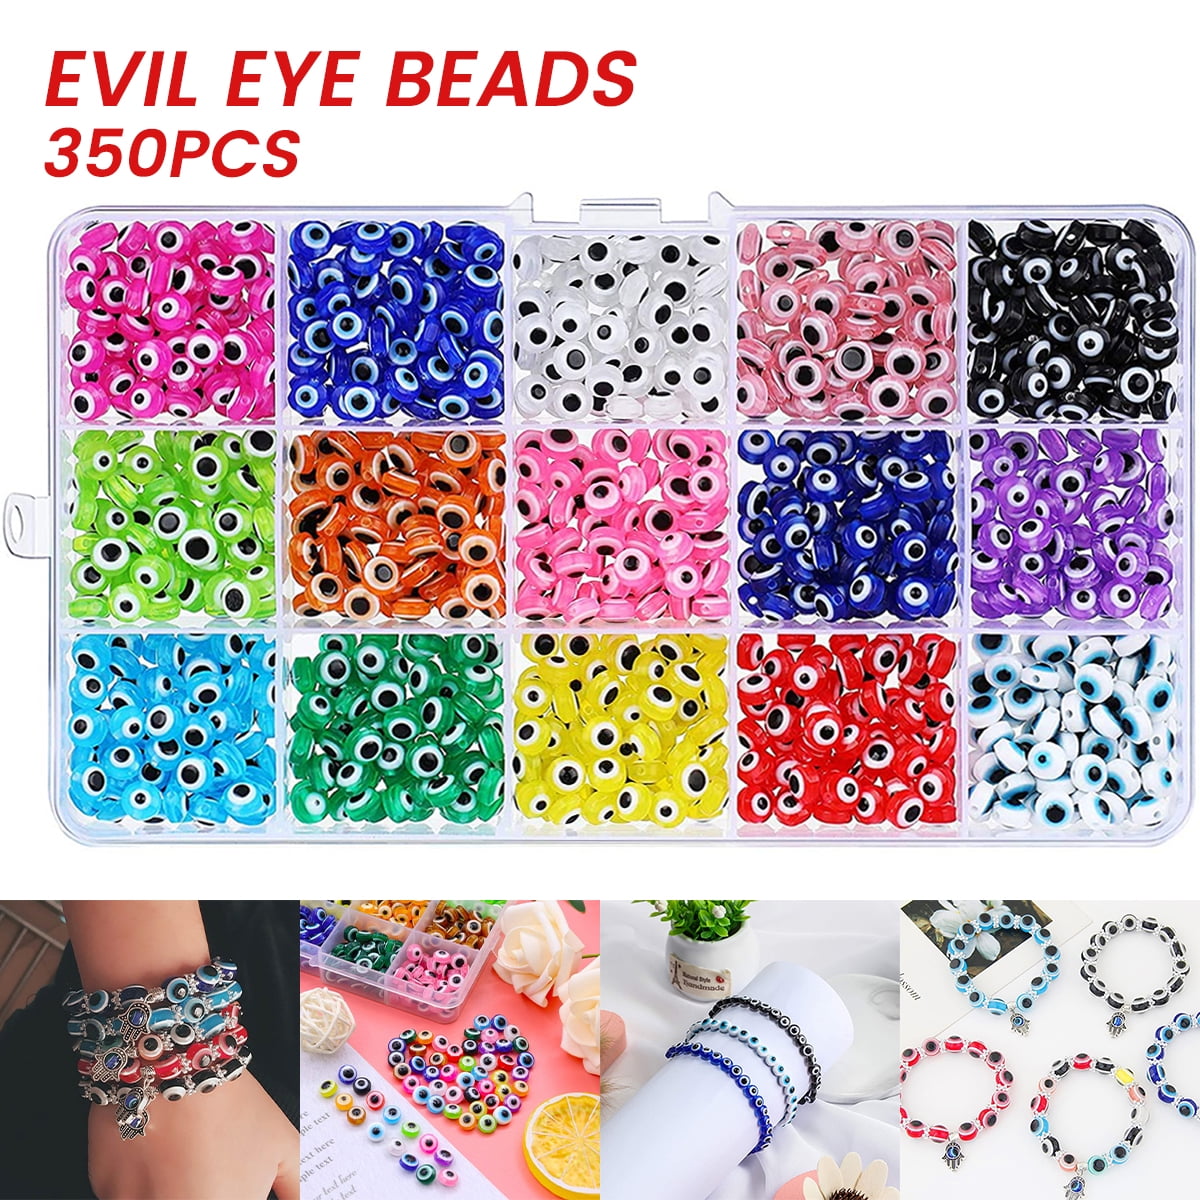 Jytue 450pcs Evil Eye Beads Set 6mm 15 Colors Flat Easter Round Eye Bracelet Bead Kits Colorful for DIY Bracelets Jewelry Making, Adult Unisex, Size